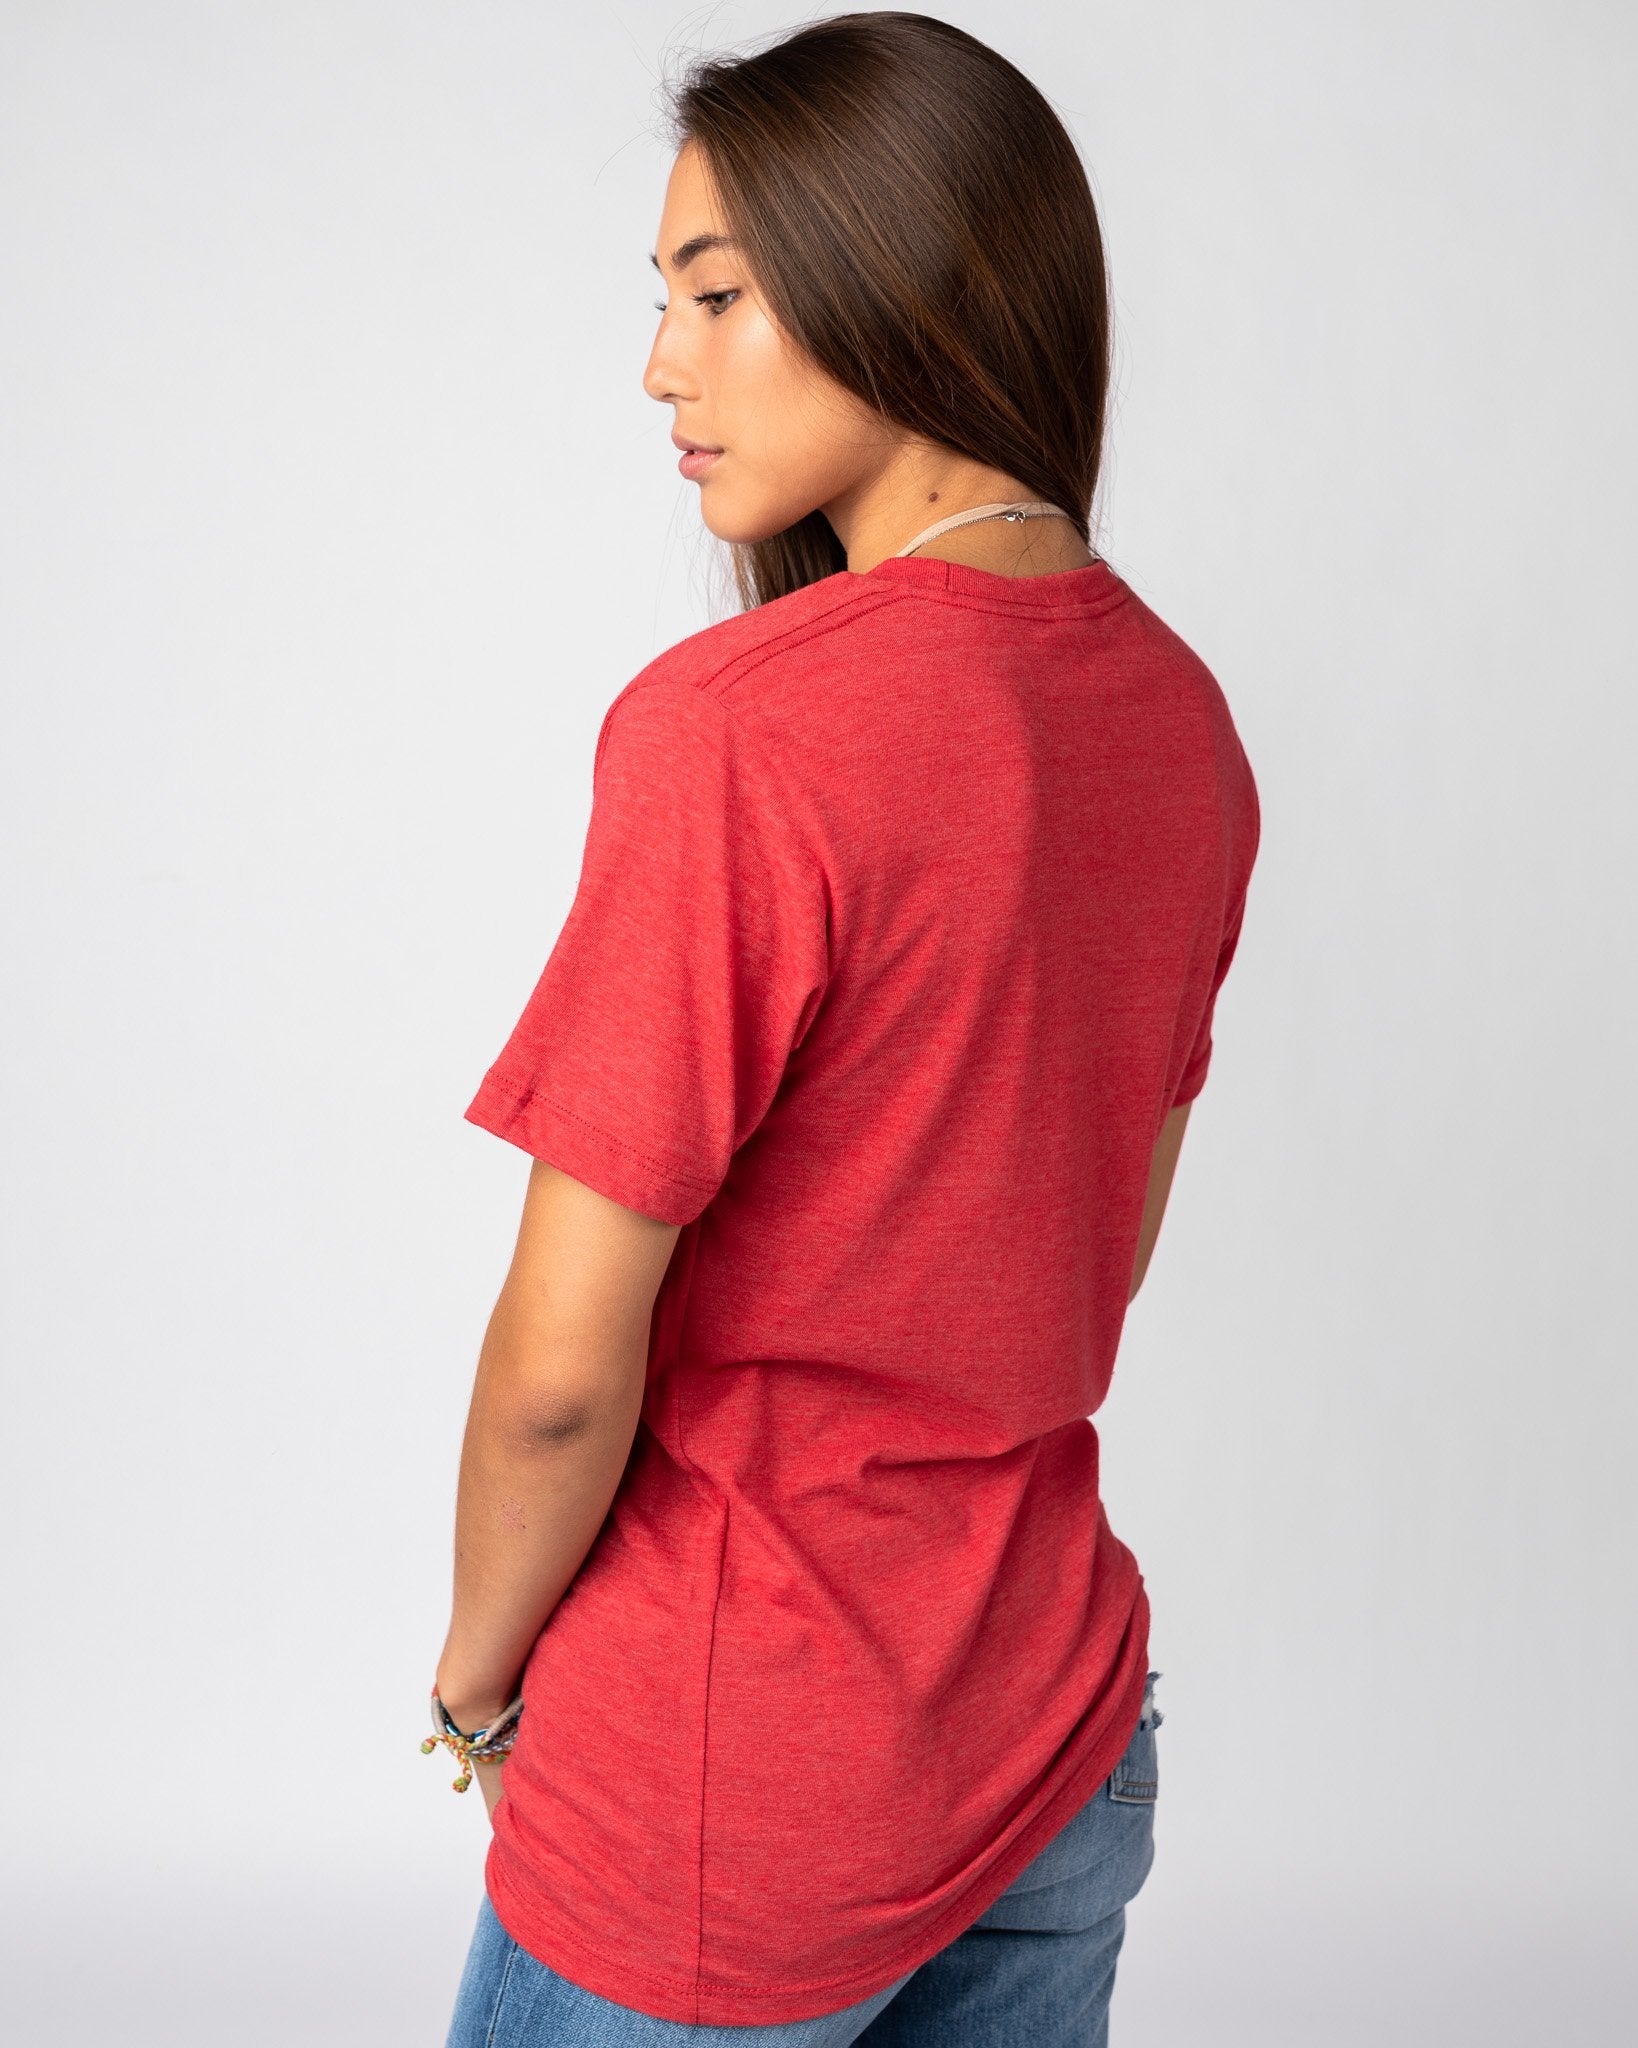 Heather Red Unisex Essential Vintage T-Shirt | CHARLIE HUSTLE